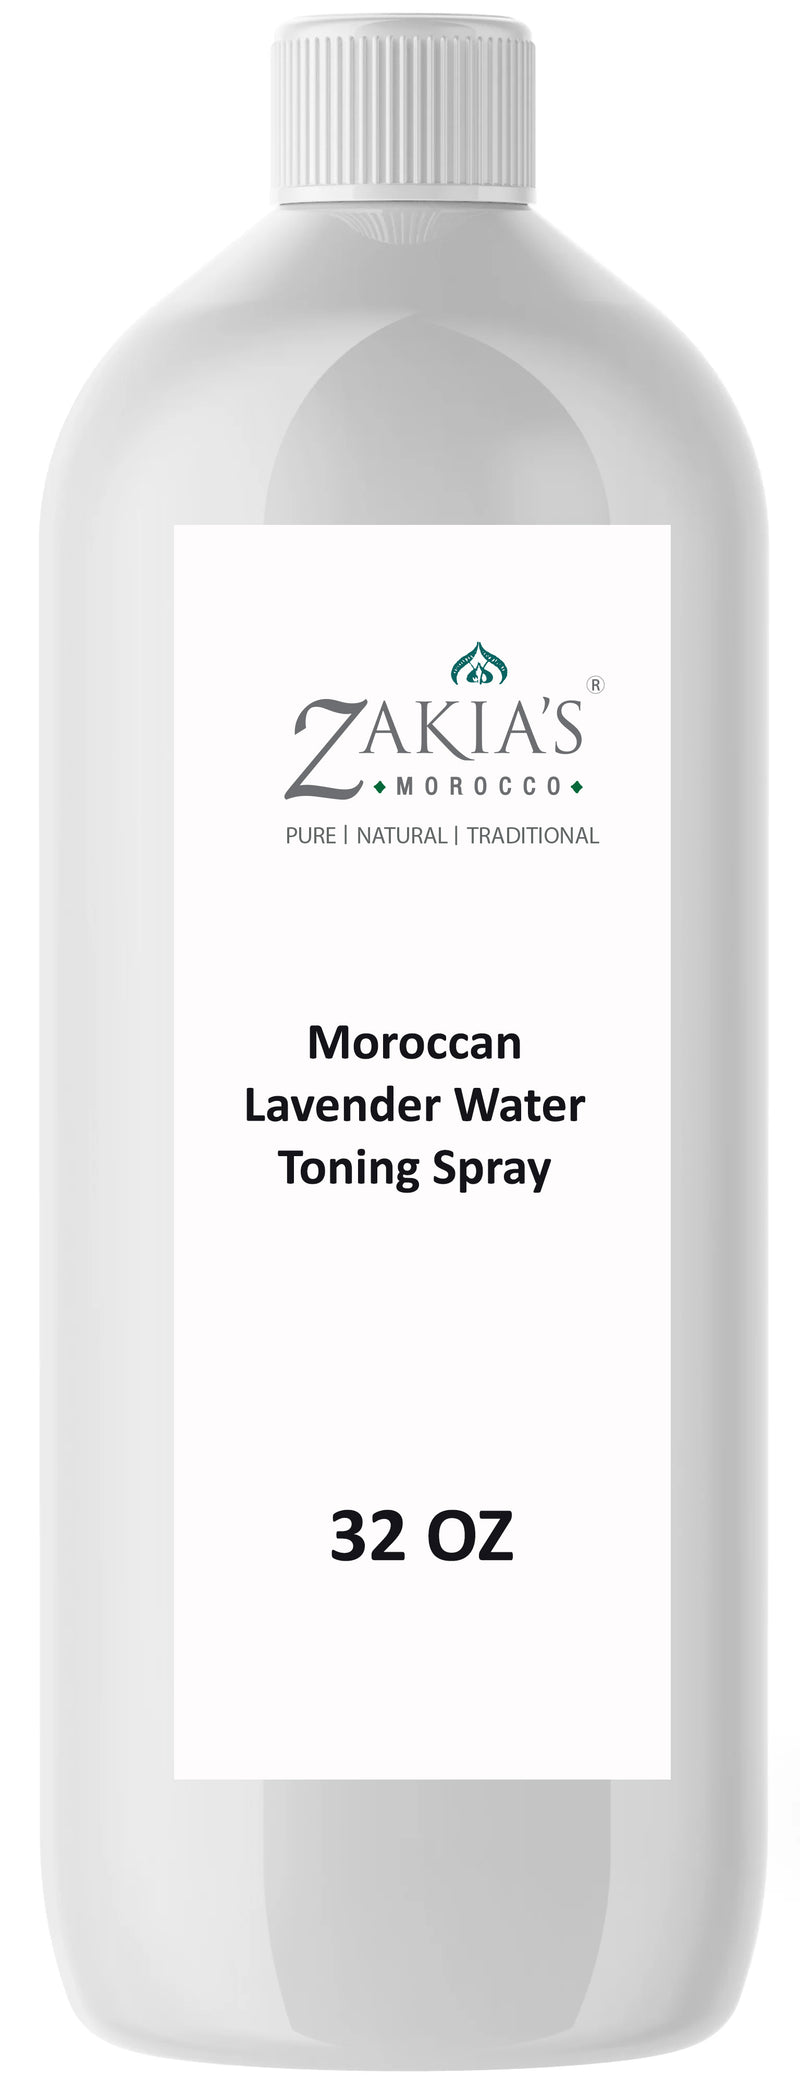 WHOLESALE_ Moroccan Lavender Water Toning Spray - 32 oz